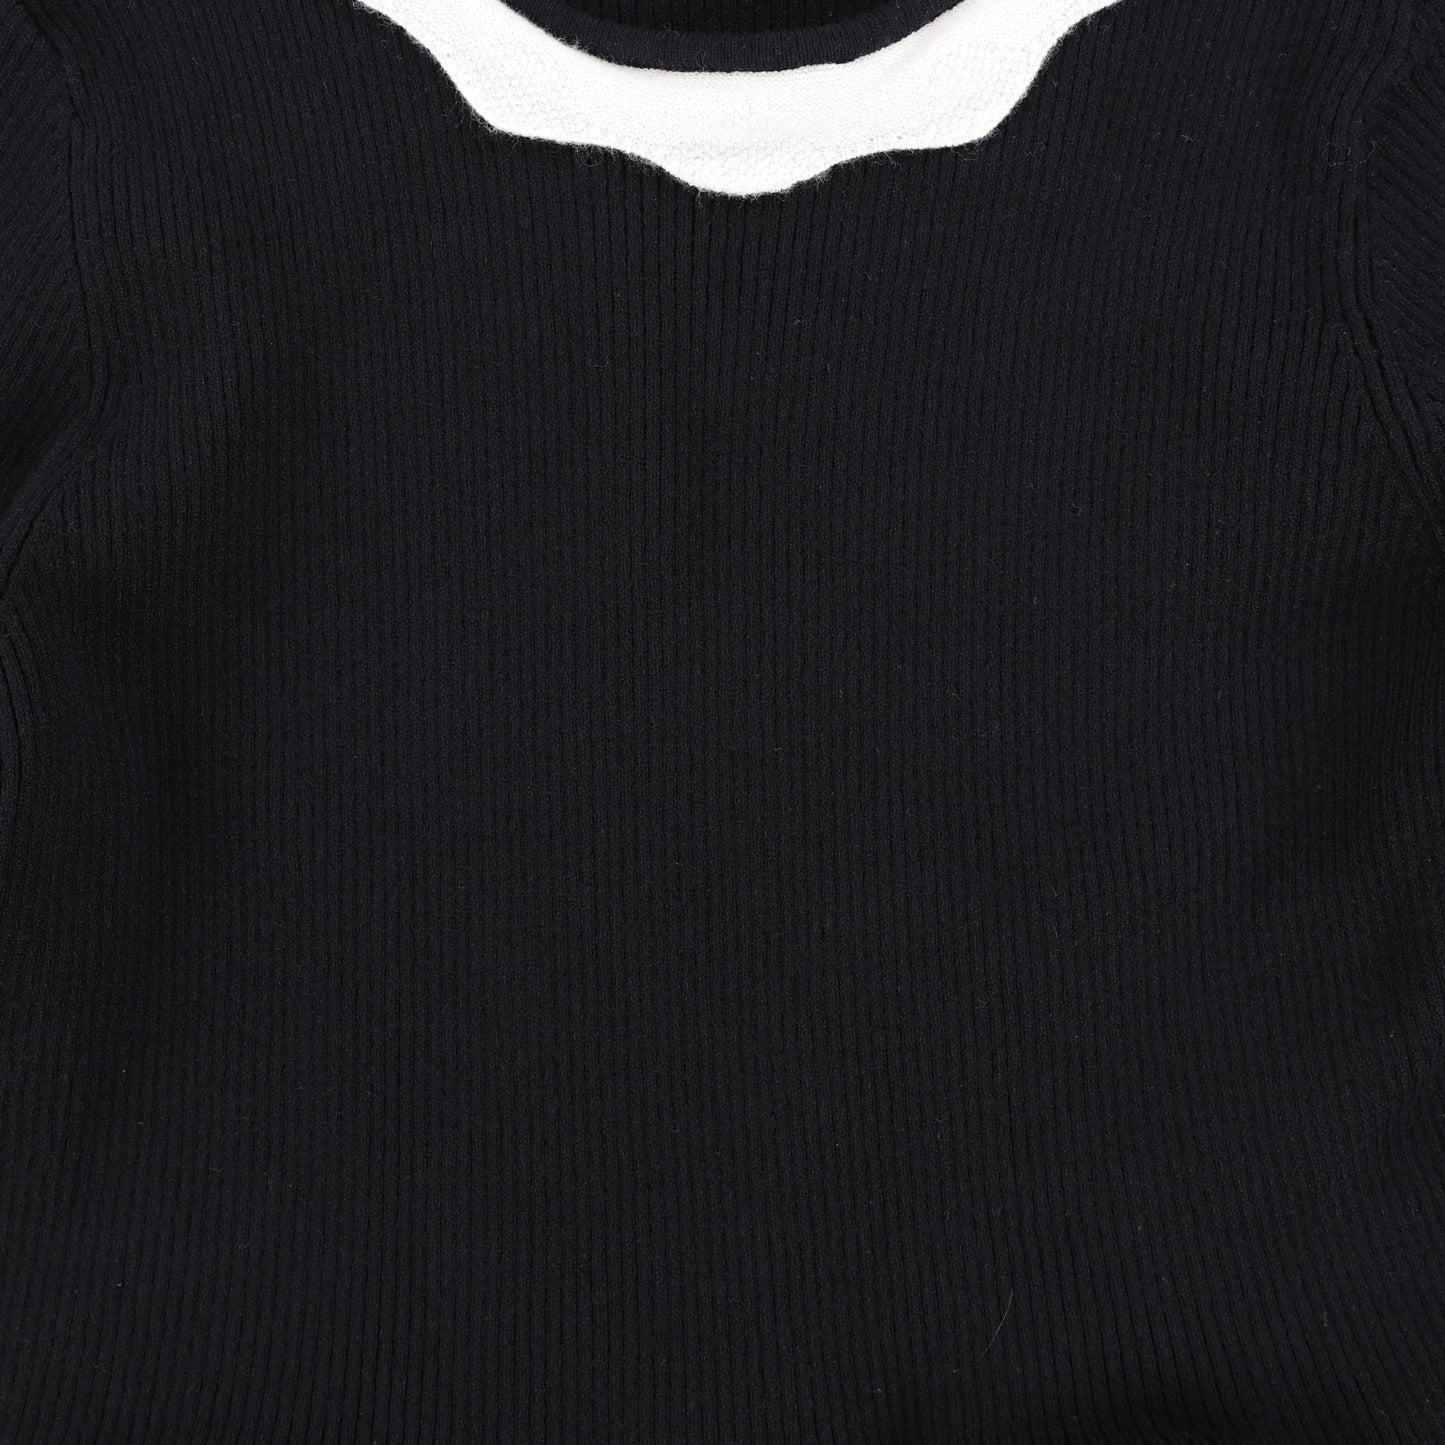 Bamboo Black Knit Scallop Collared Dress [Final Sale]